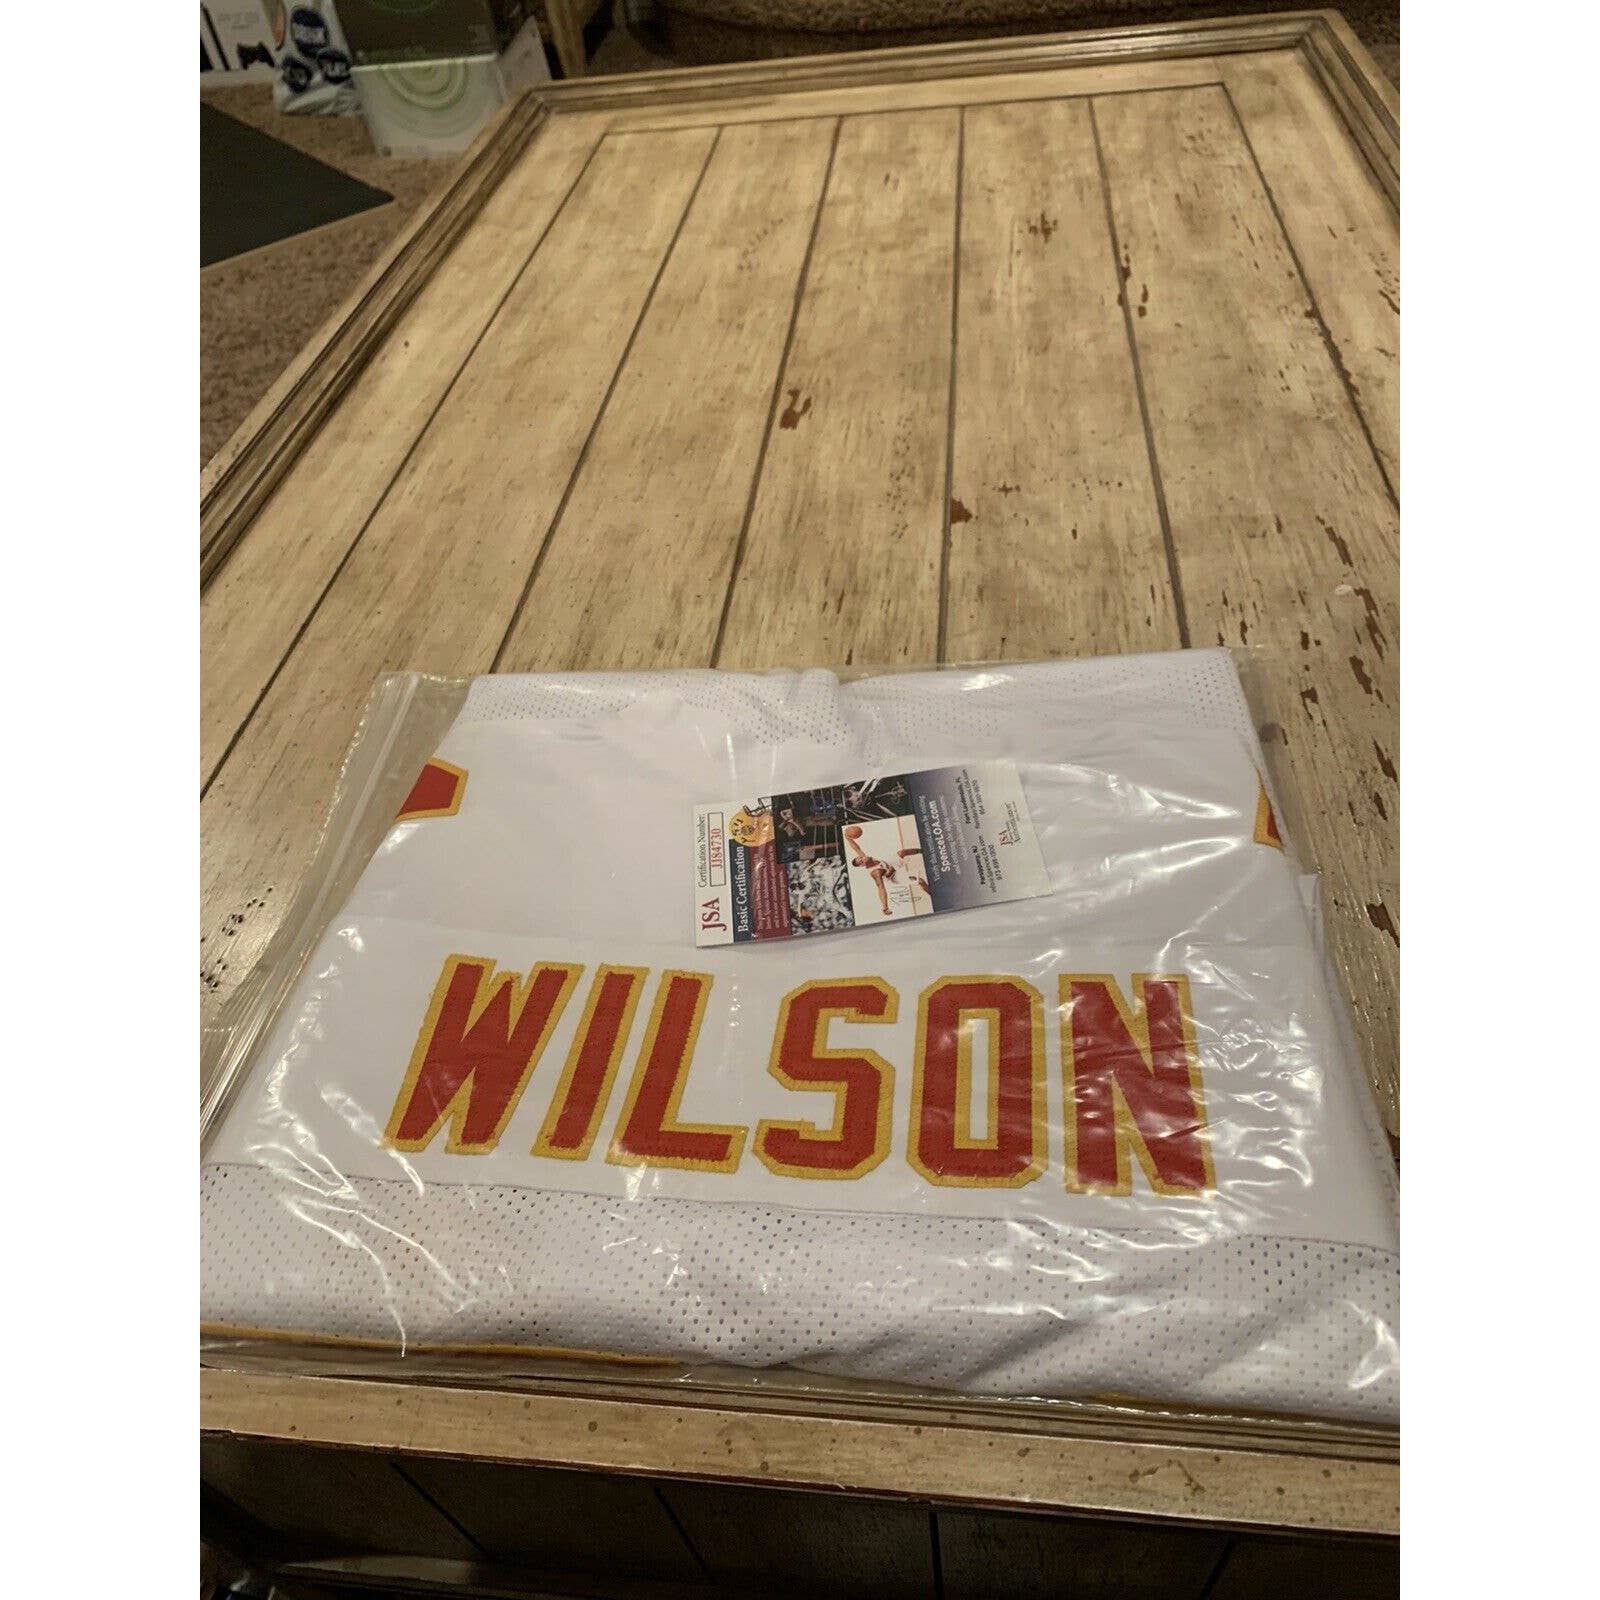 Damien Wilson Autographed/Signed Jersey JSA COA Kansas City Chiefs - TreasuresEvolved